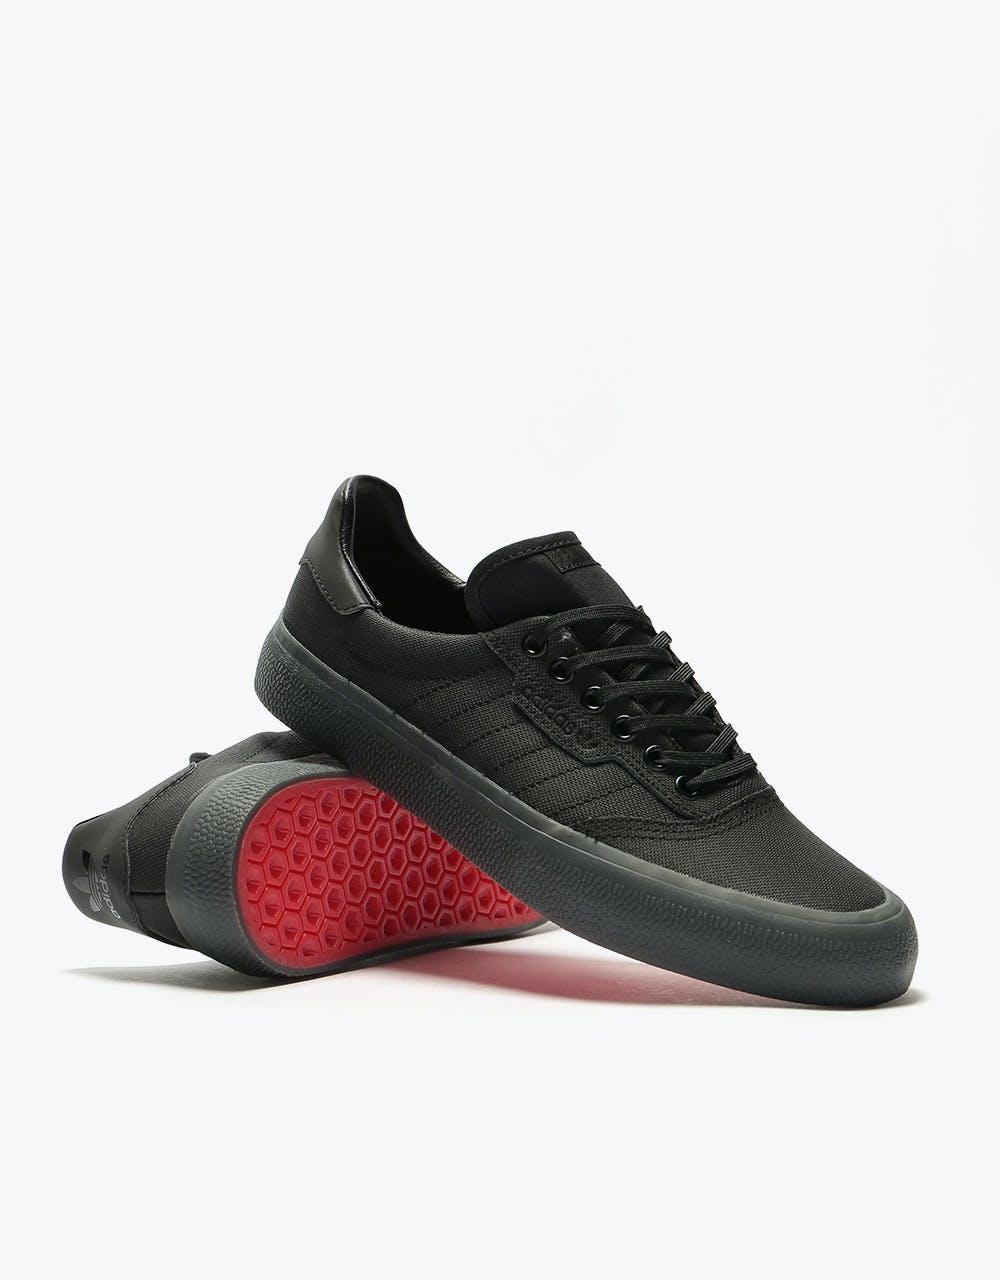 Adidas 3MC Skate Shoes - Core Black/Core Black/Core Black